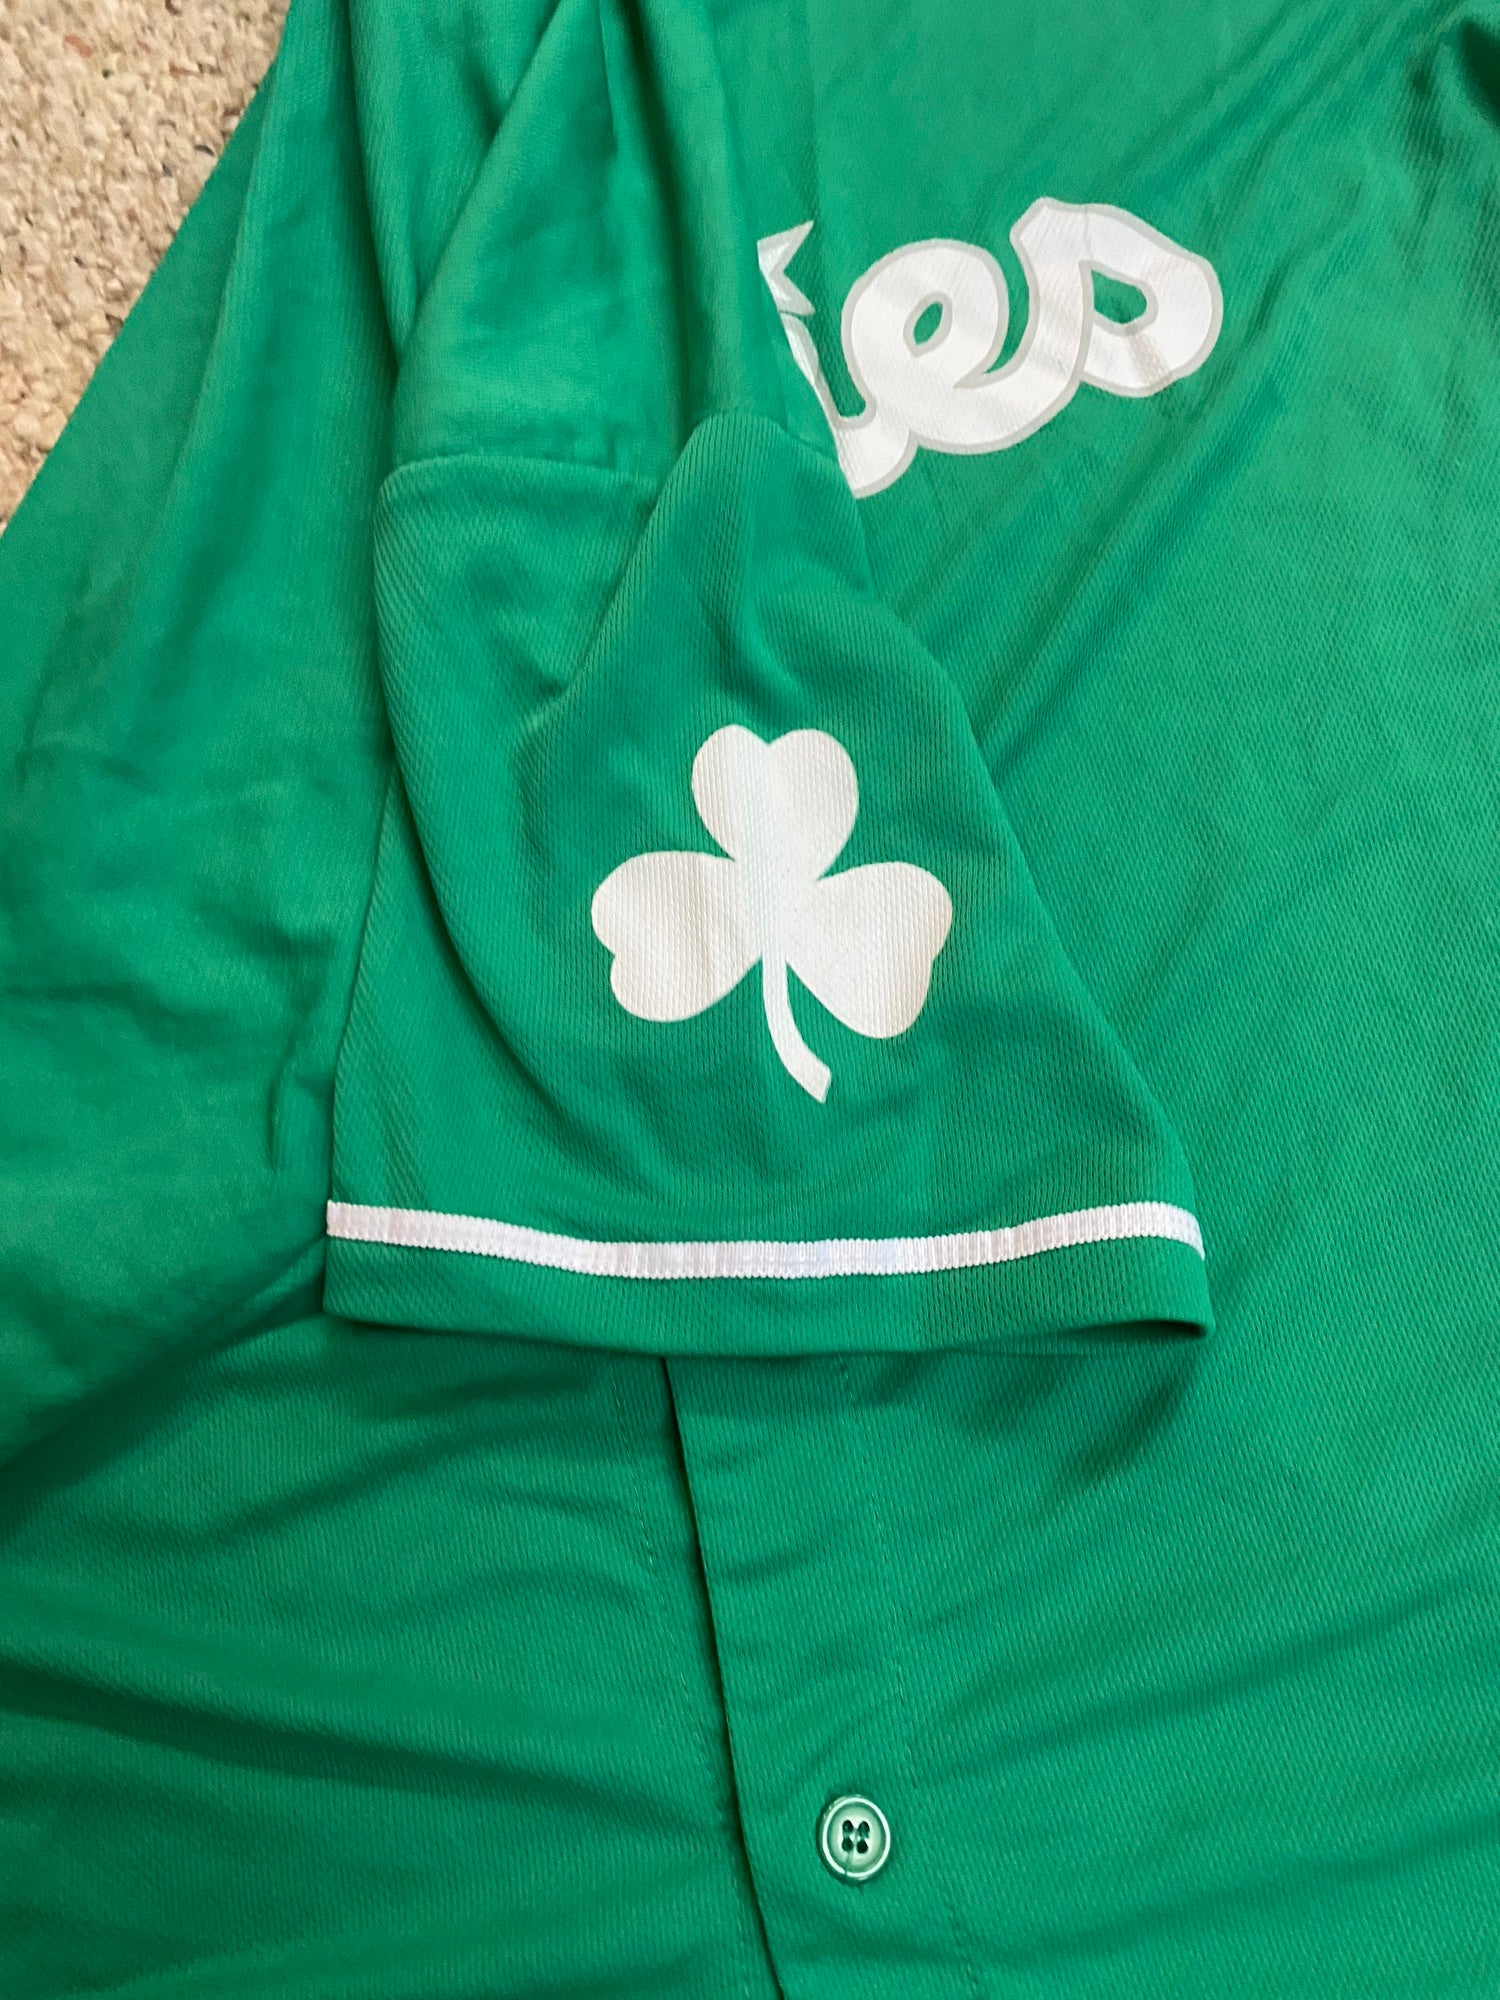 Philadelphia Phillies True Fan St. Patrick's Green Stitched Jersey Mens Sz  XL